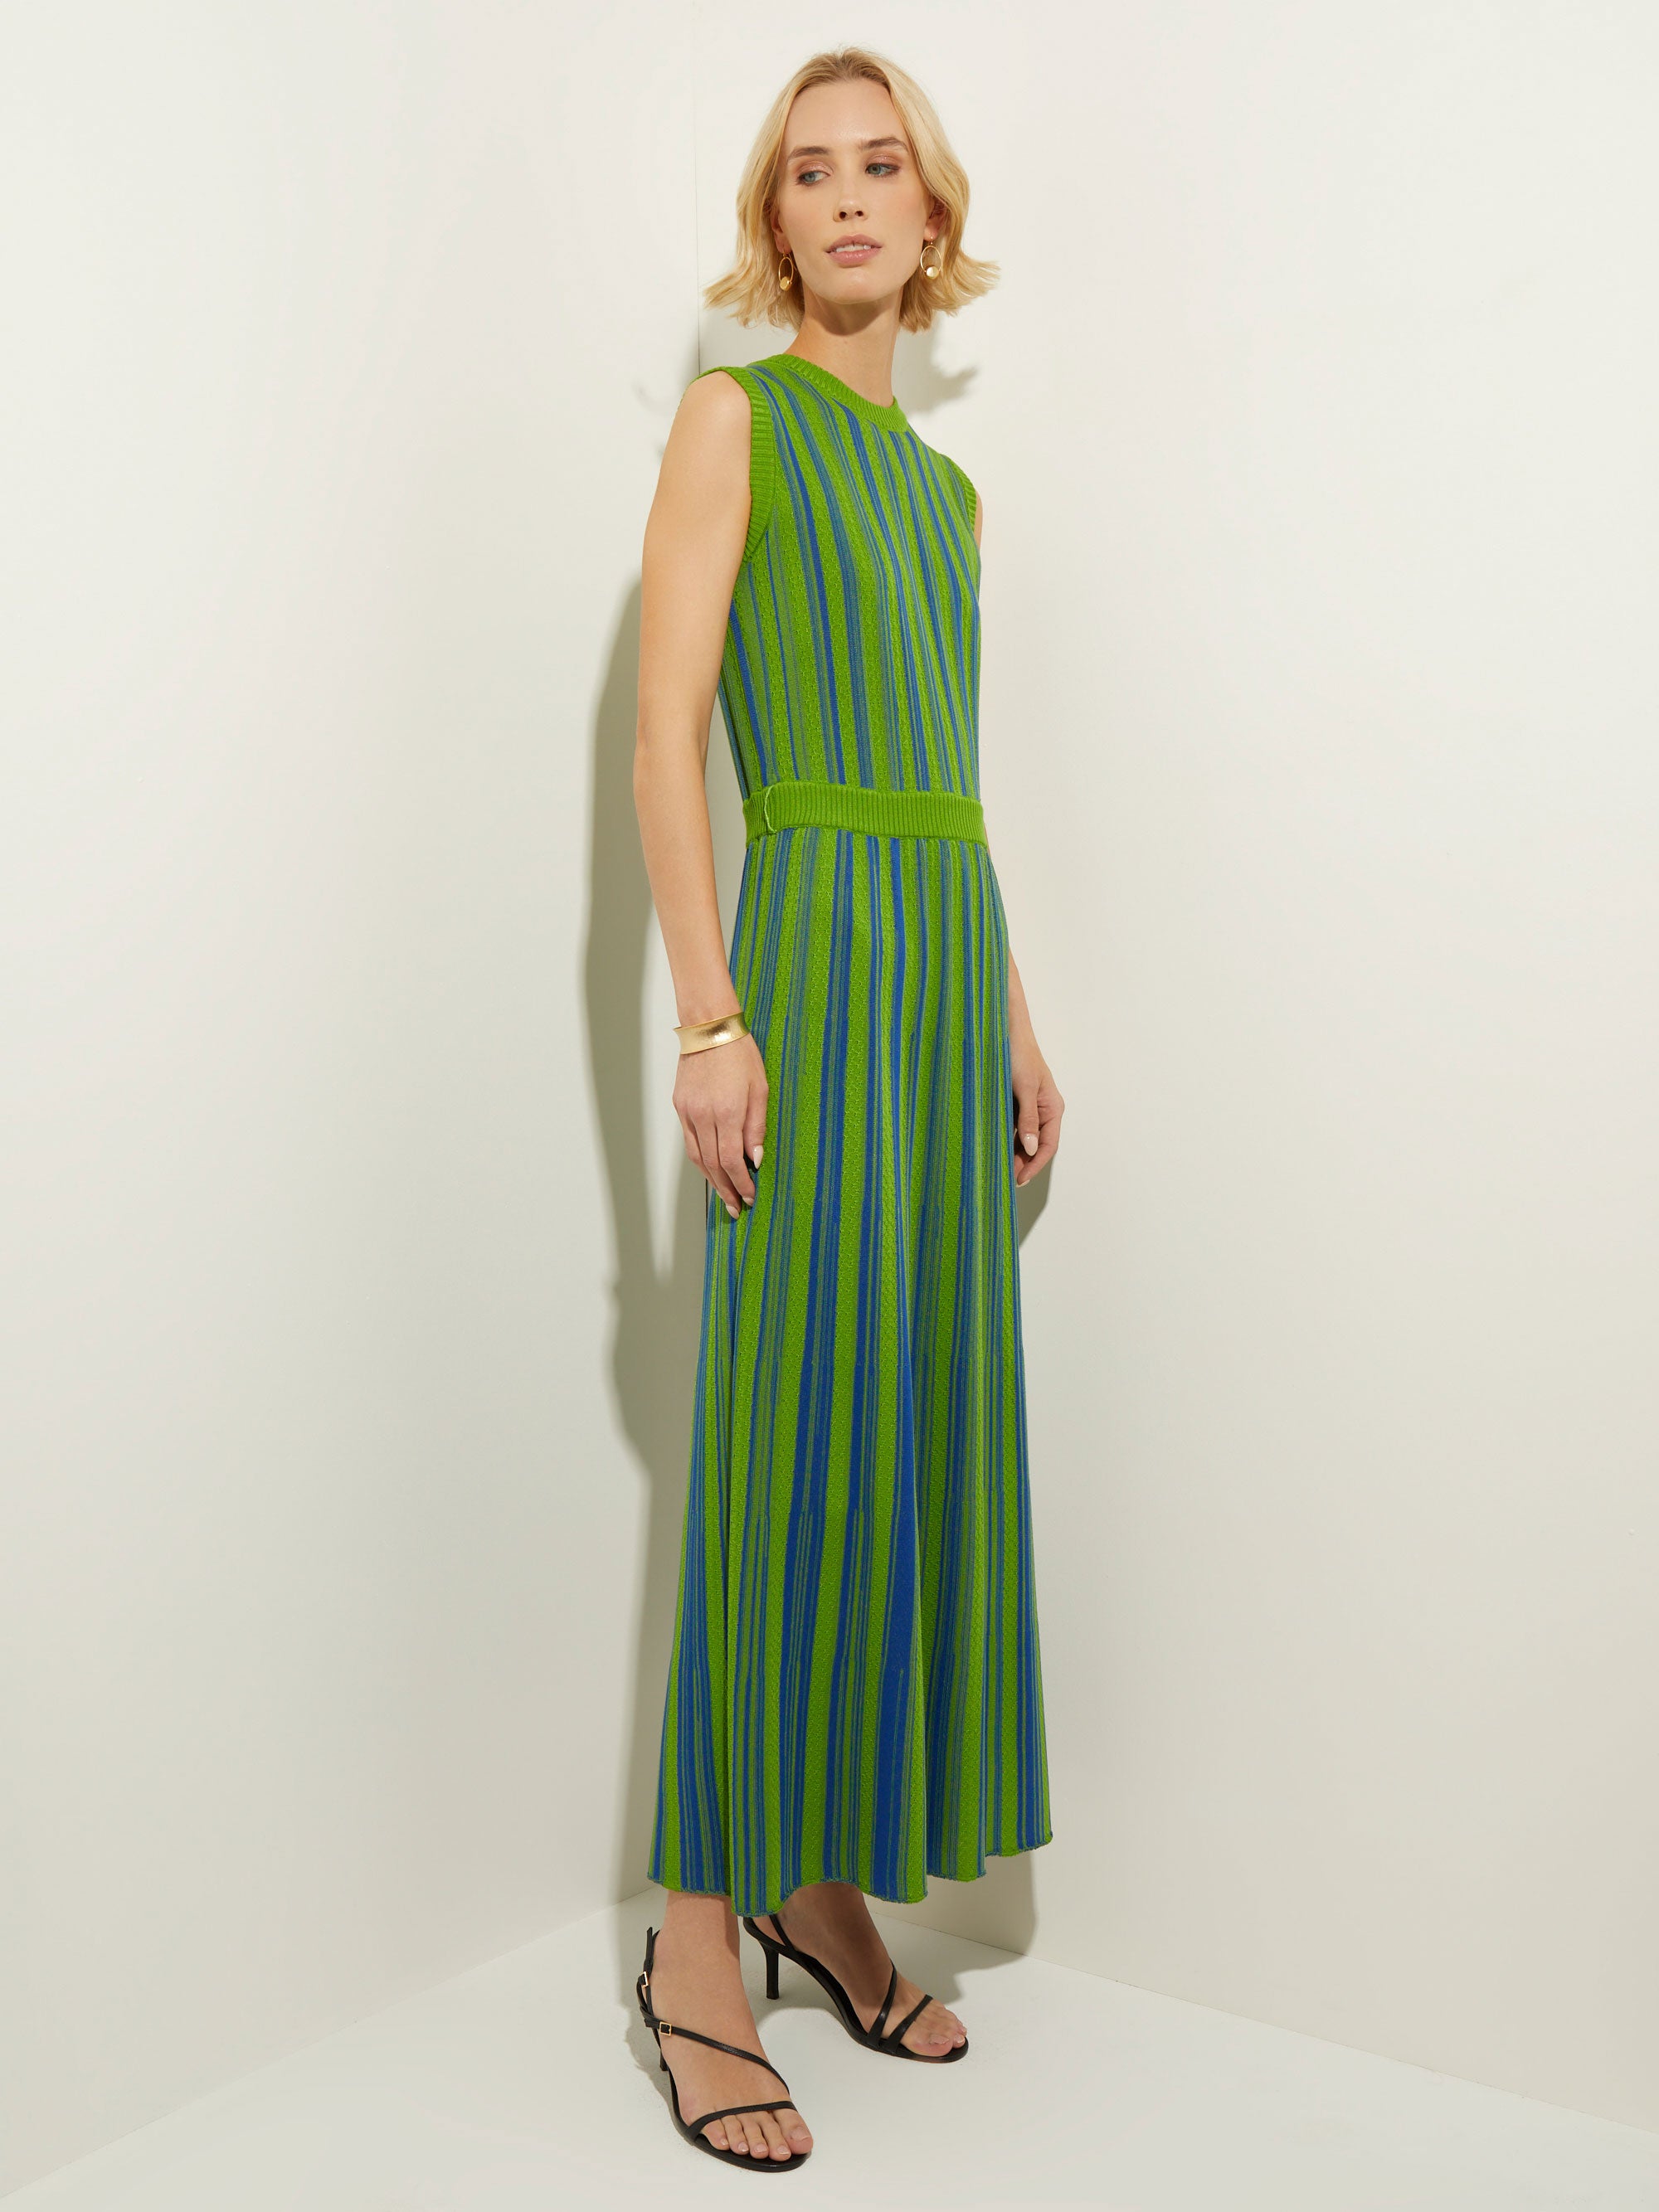 Evergreen Tank Dress, A-Line, Sleeveless, Sustainable Dress